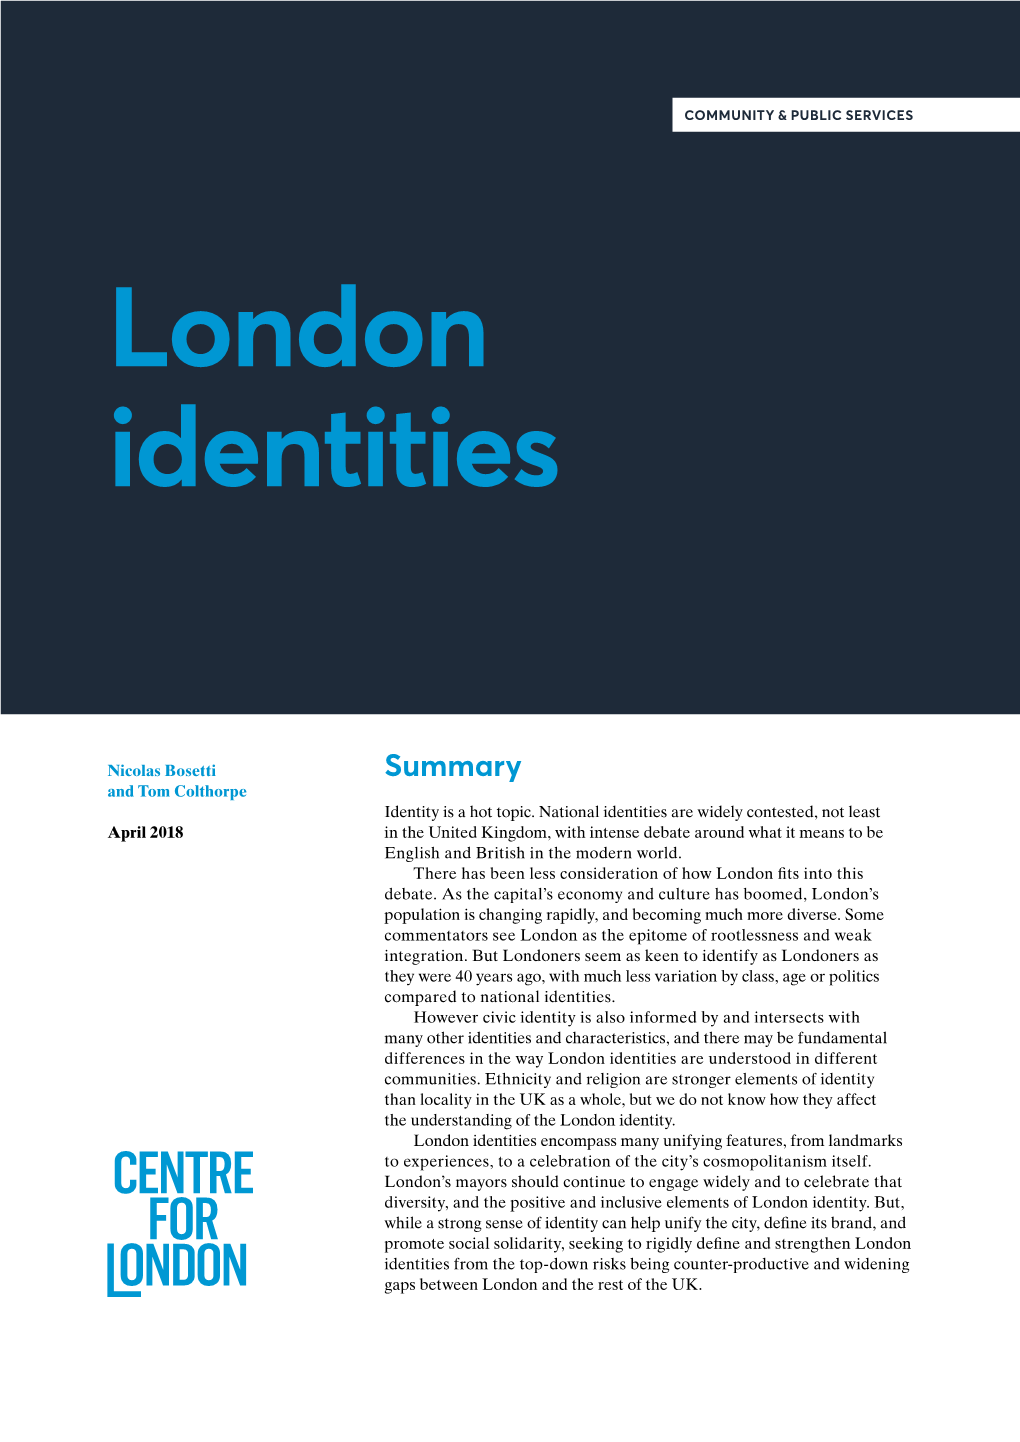 London Identities